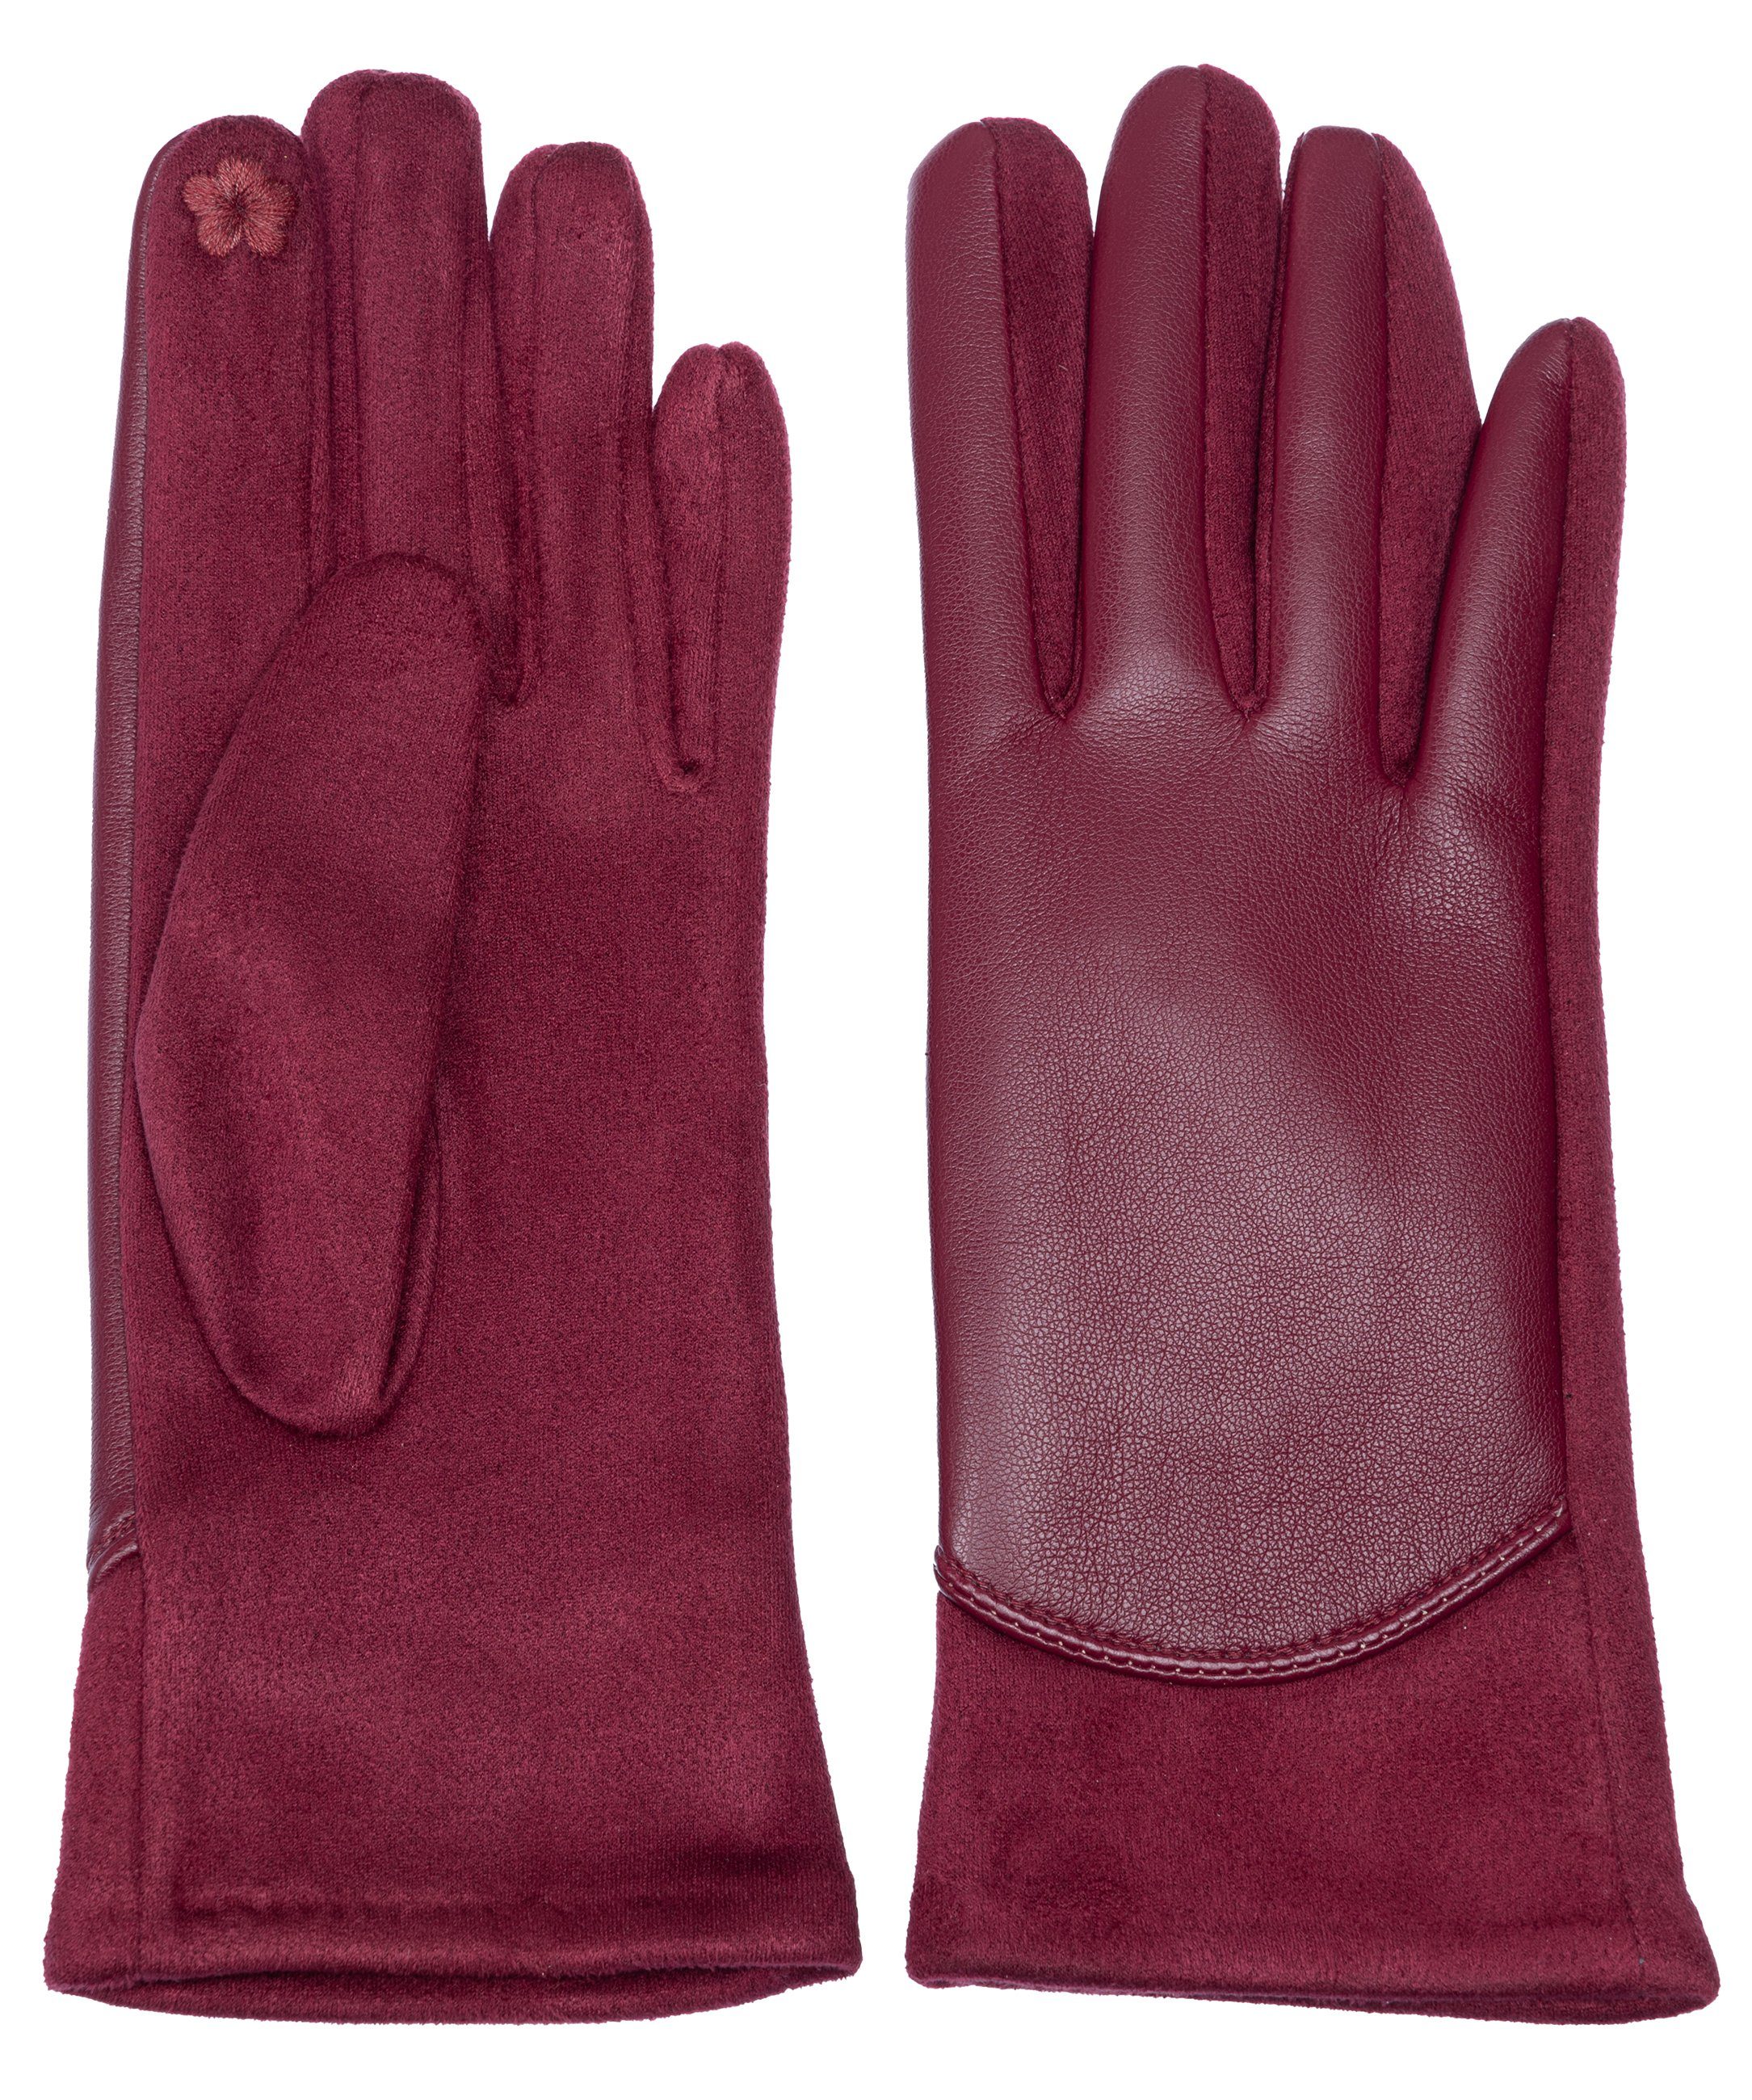 Caspar Strickhandschuhe GLV016 klassisch Damen elegante uni weinrot Handschuhe